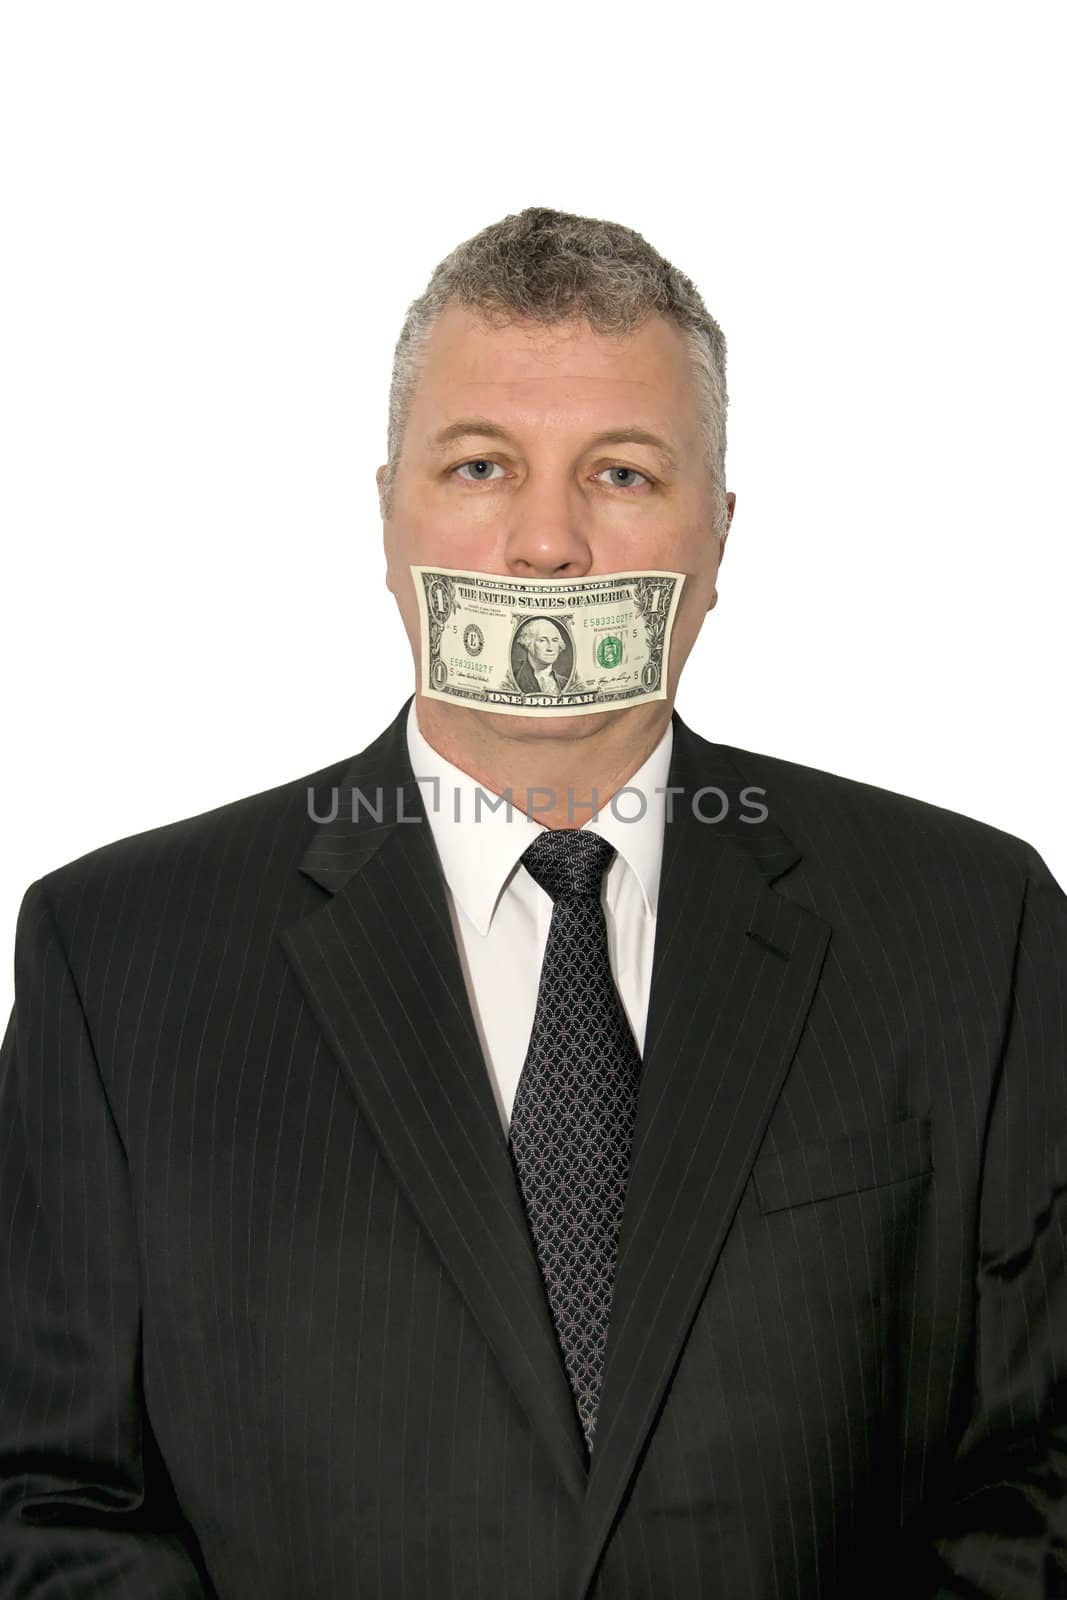 Hush Money by wayneandrose